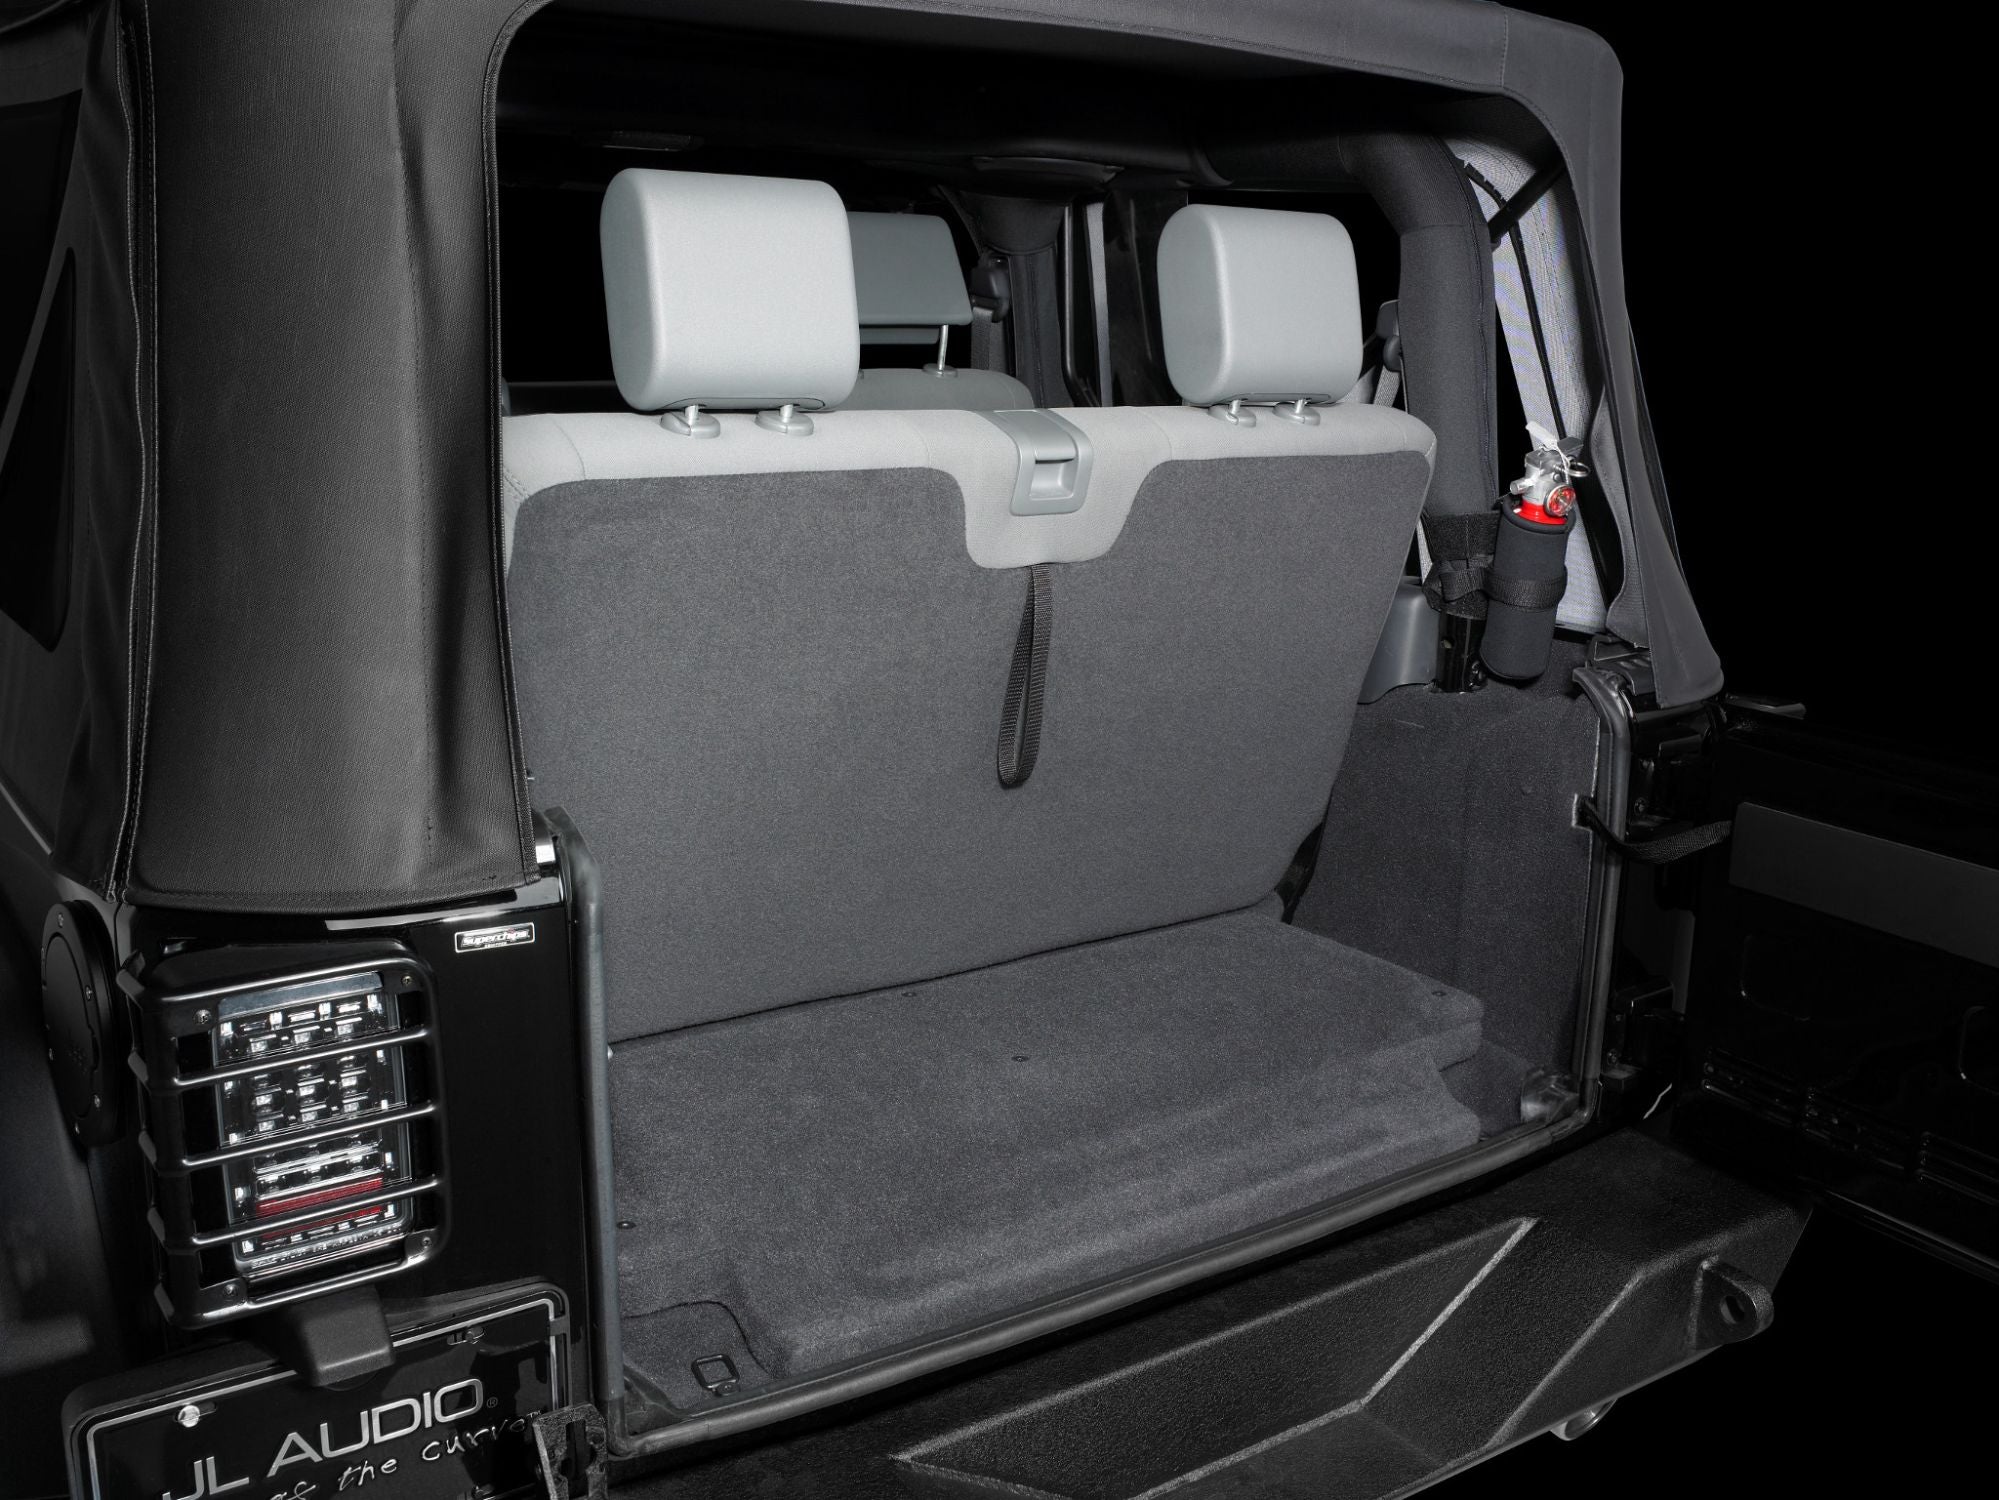 SB-J-JK2DR/10W1v3/DG - Car Audio - Stealthbox® - Jeep - JL Audio